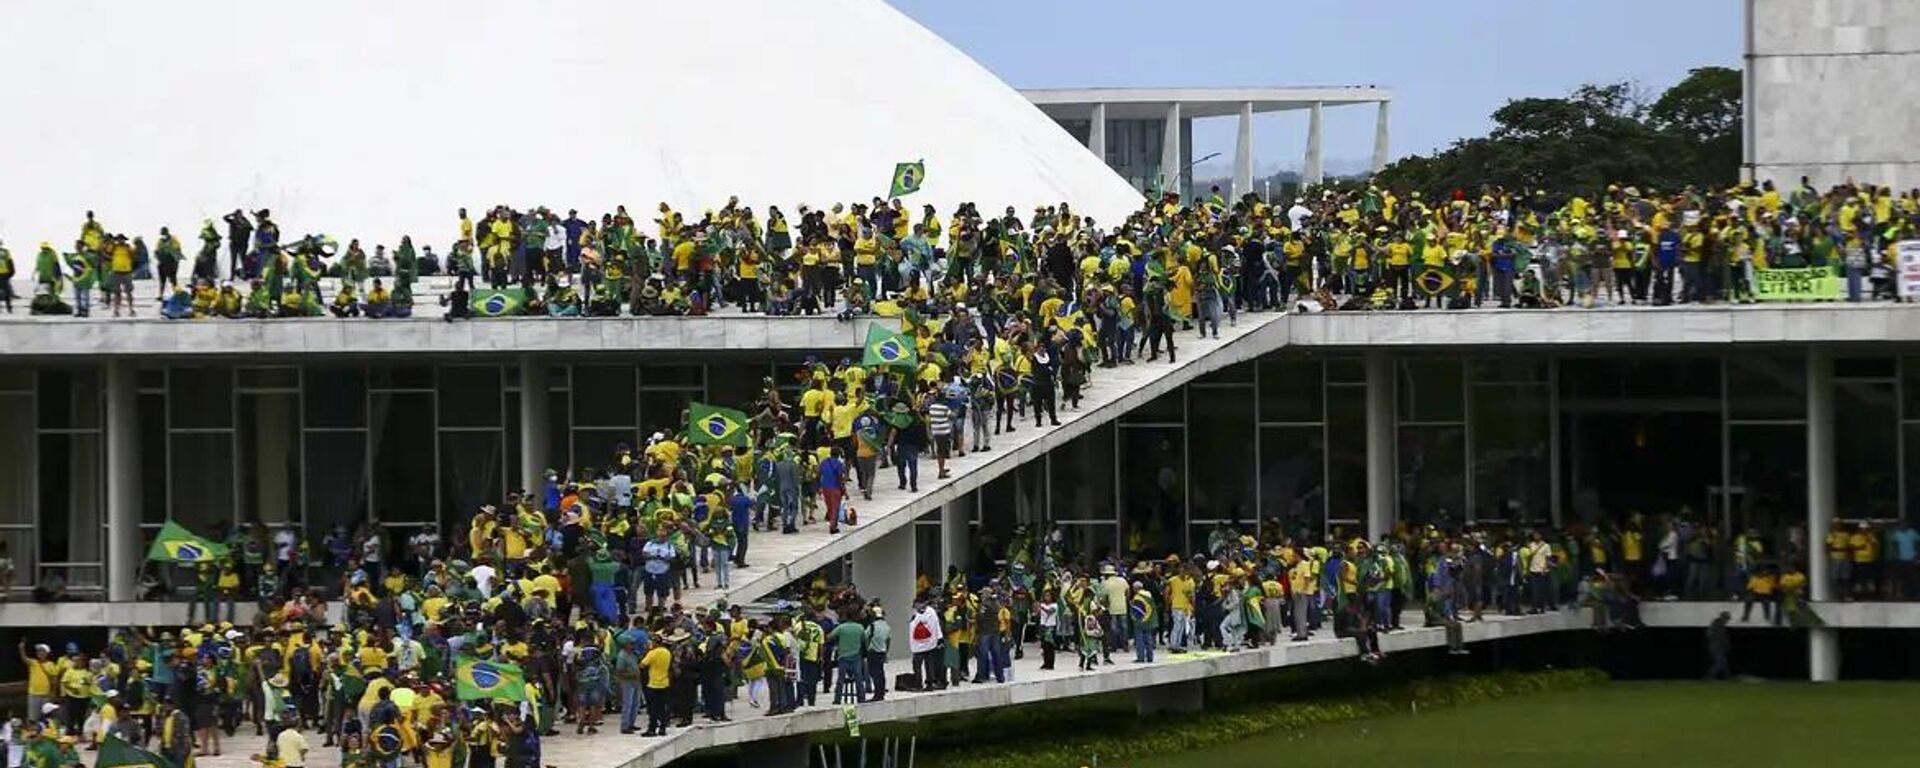 Golpistas fazendo protesto em Brasília - Sputnik Brasil, 1920, 14.12.2023